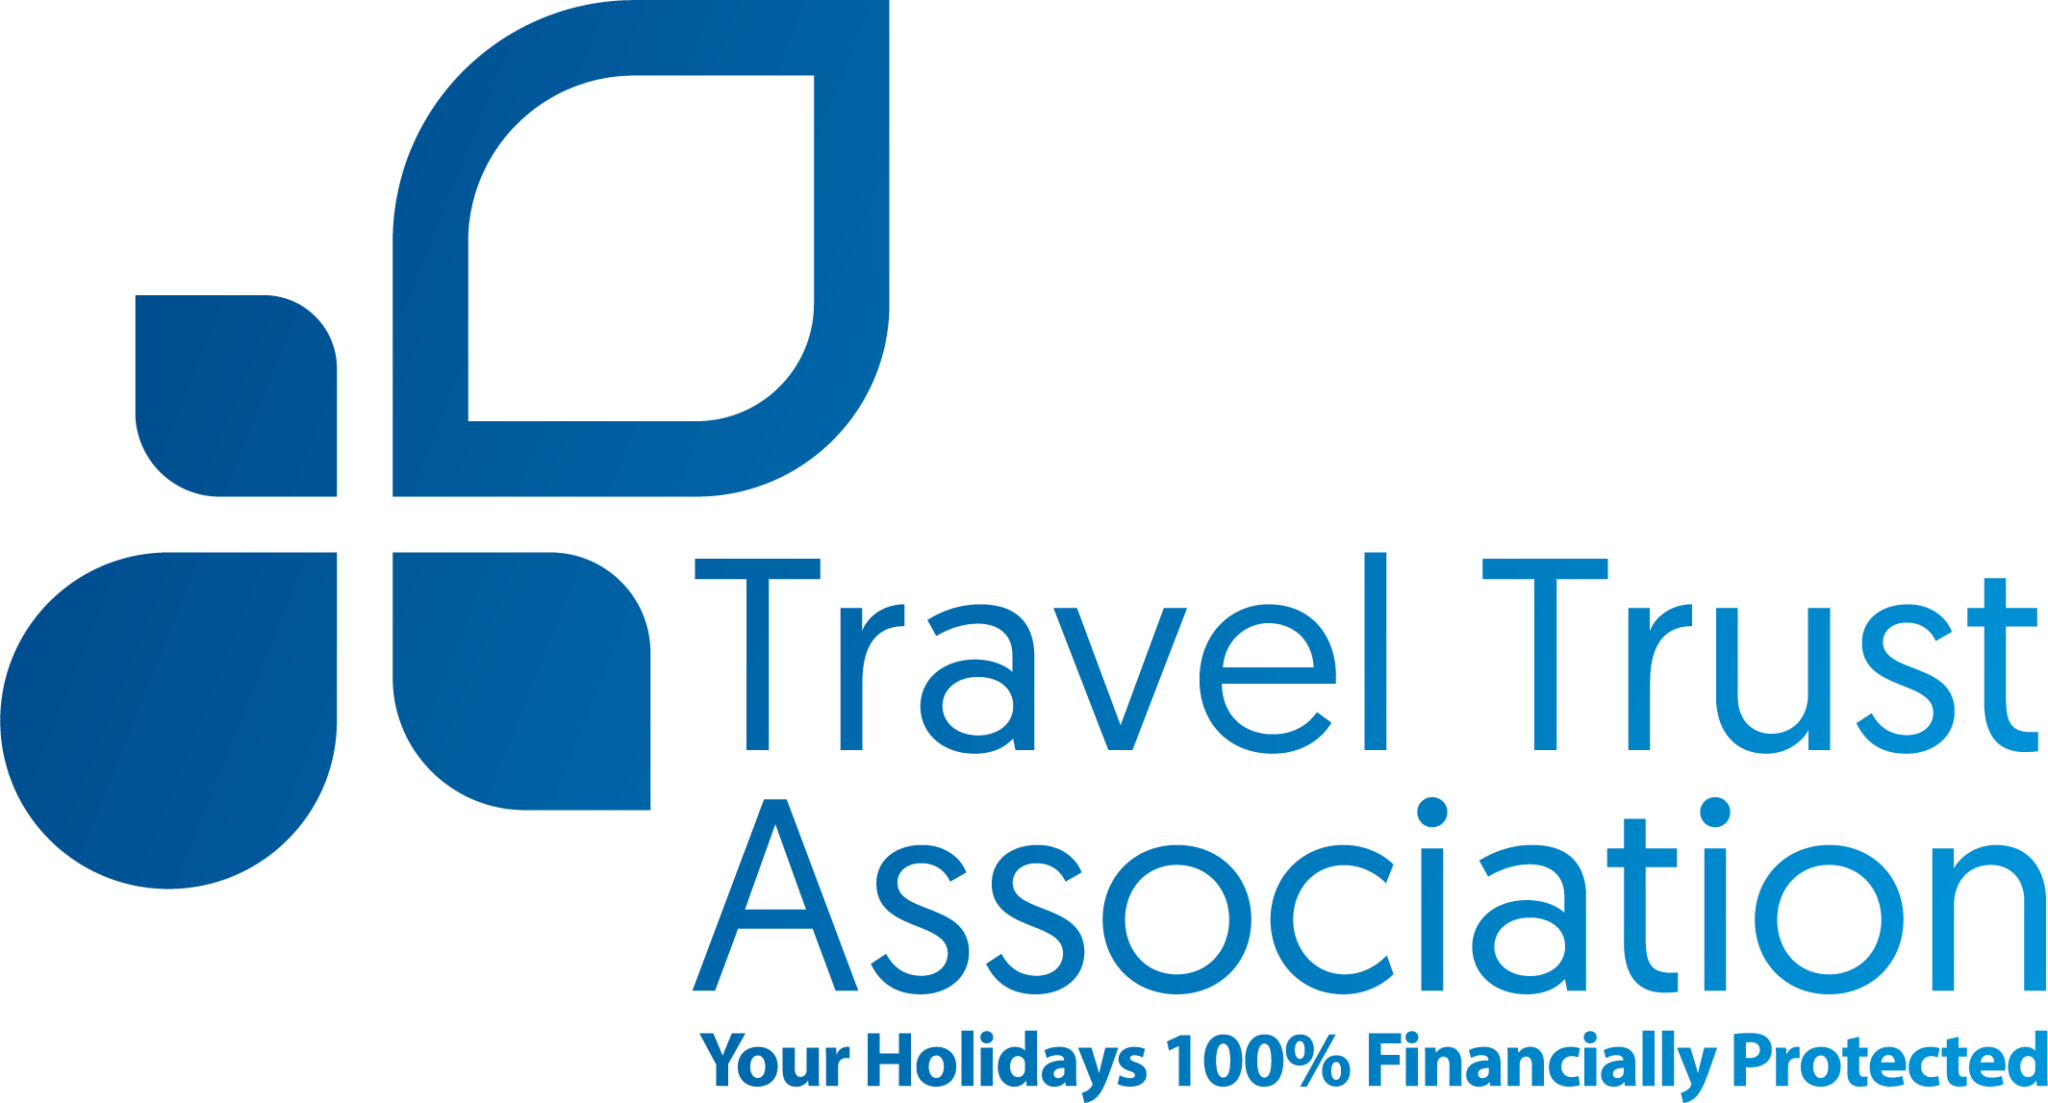 group travel association